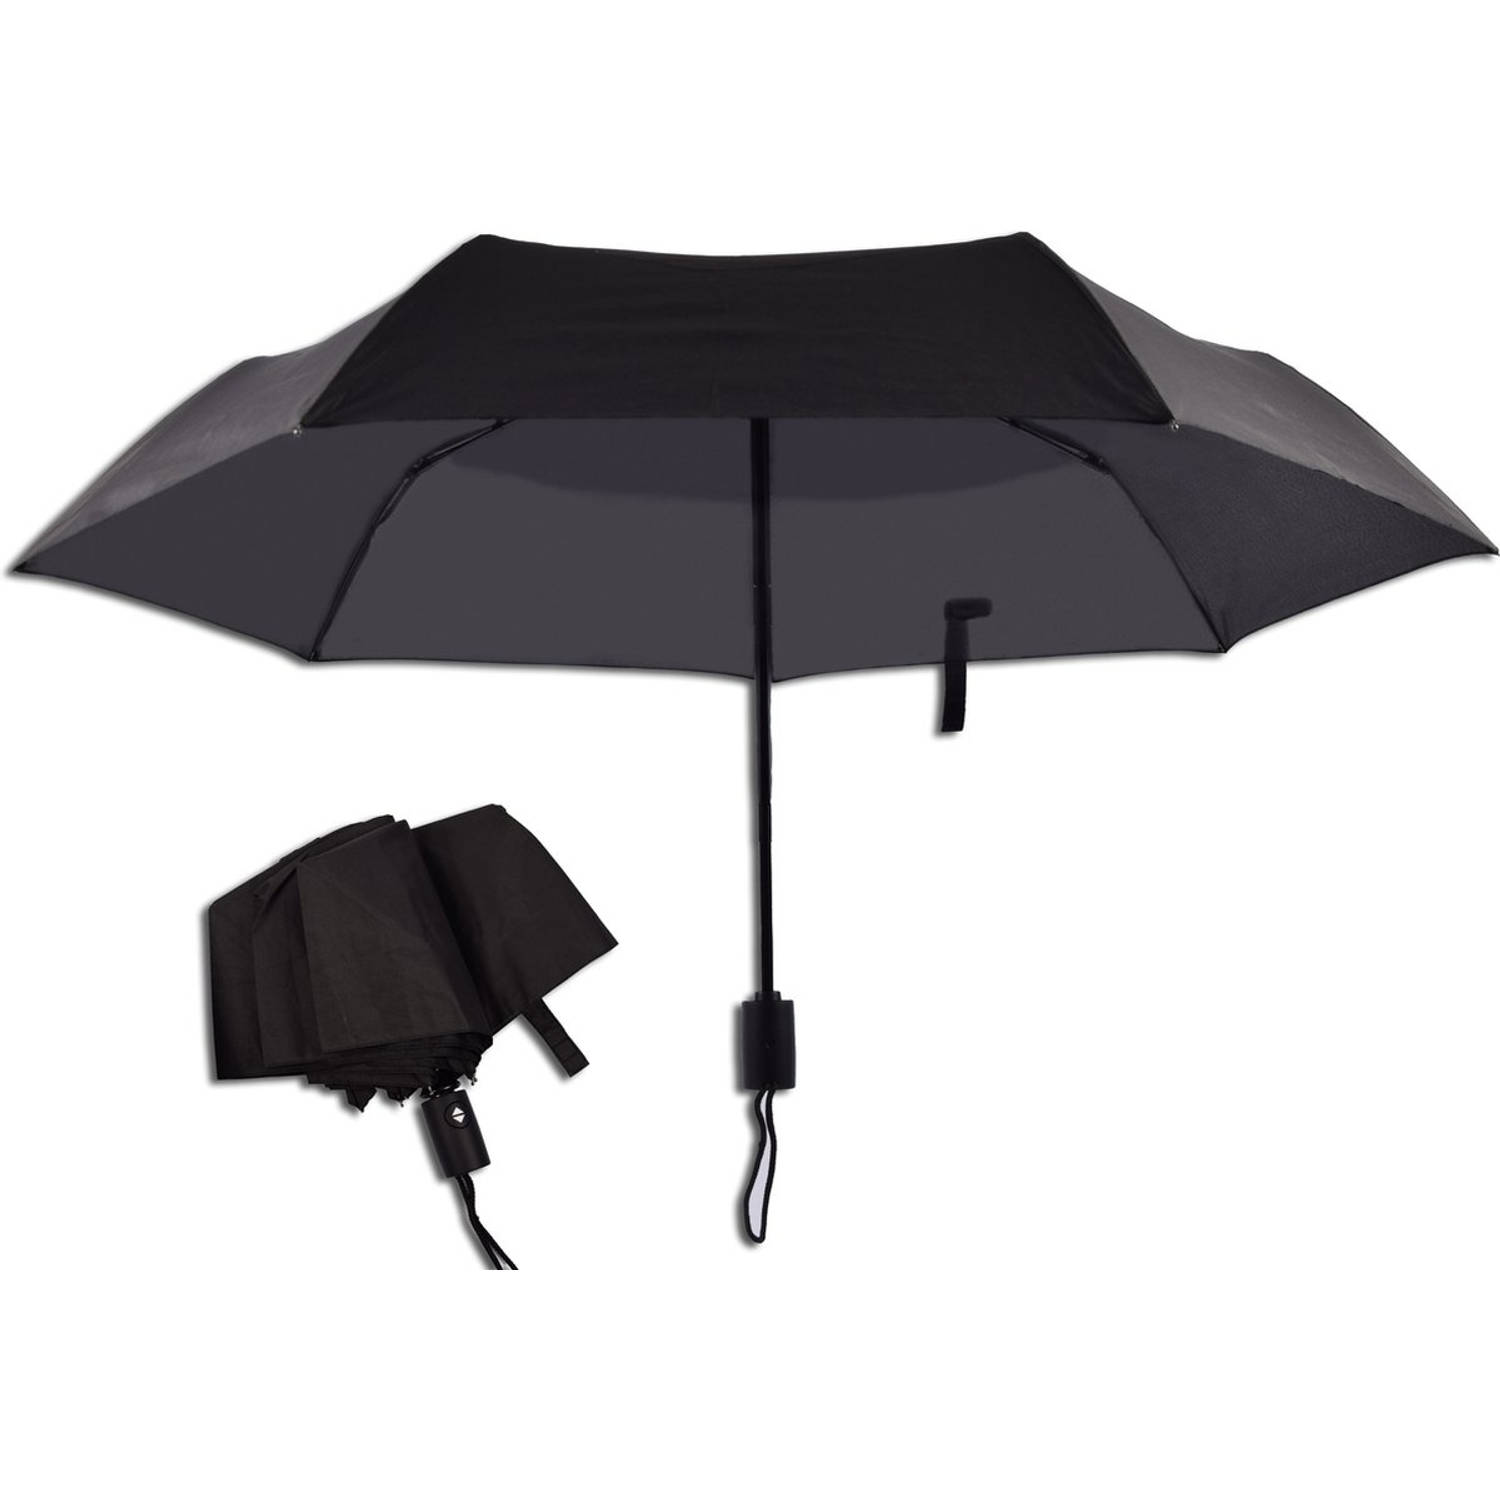 Automatische Stormparaplu - Paraplu – Automatisch, Opvouwbaar & Windproof tot 70 - 80 km p/u - Ø 95 cm - 7 panelen - Dubbele Laag - Zwart